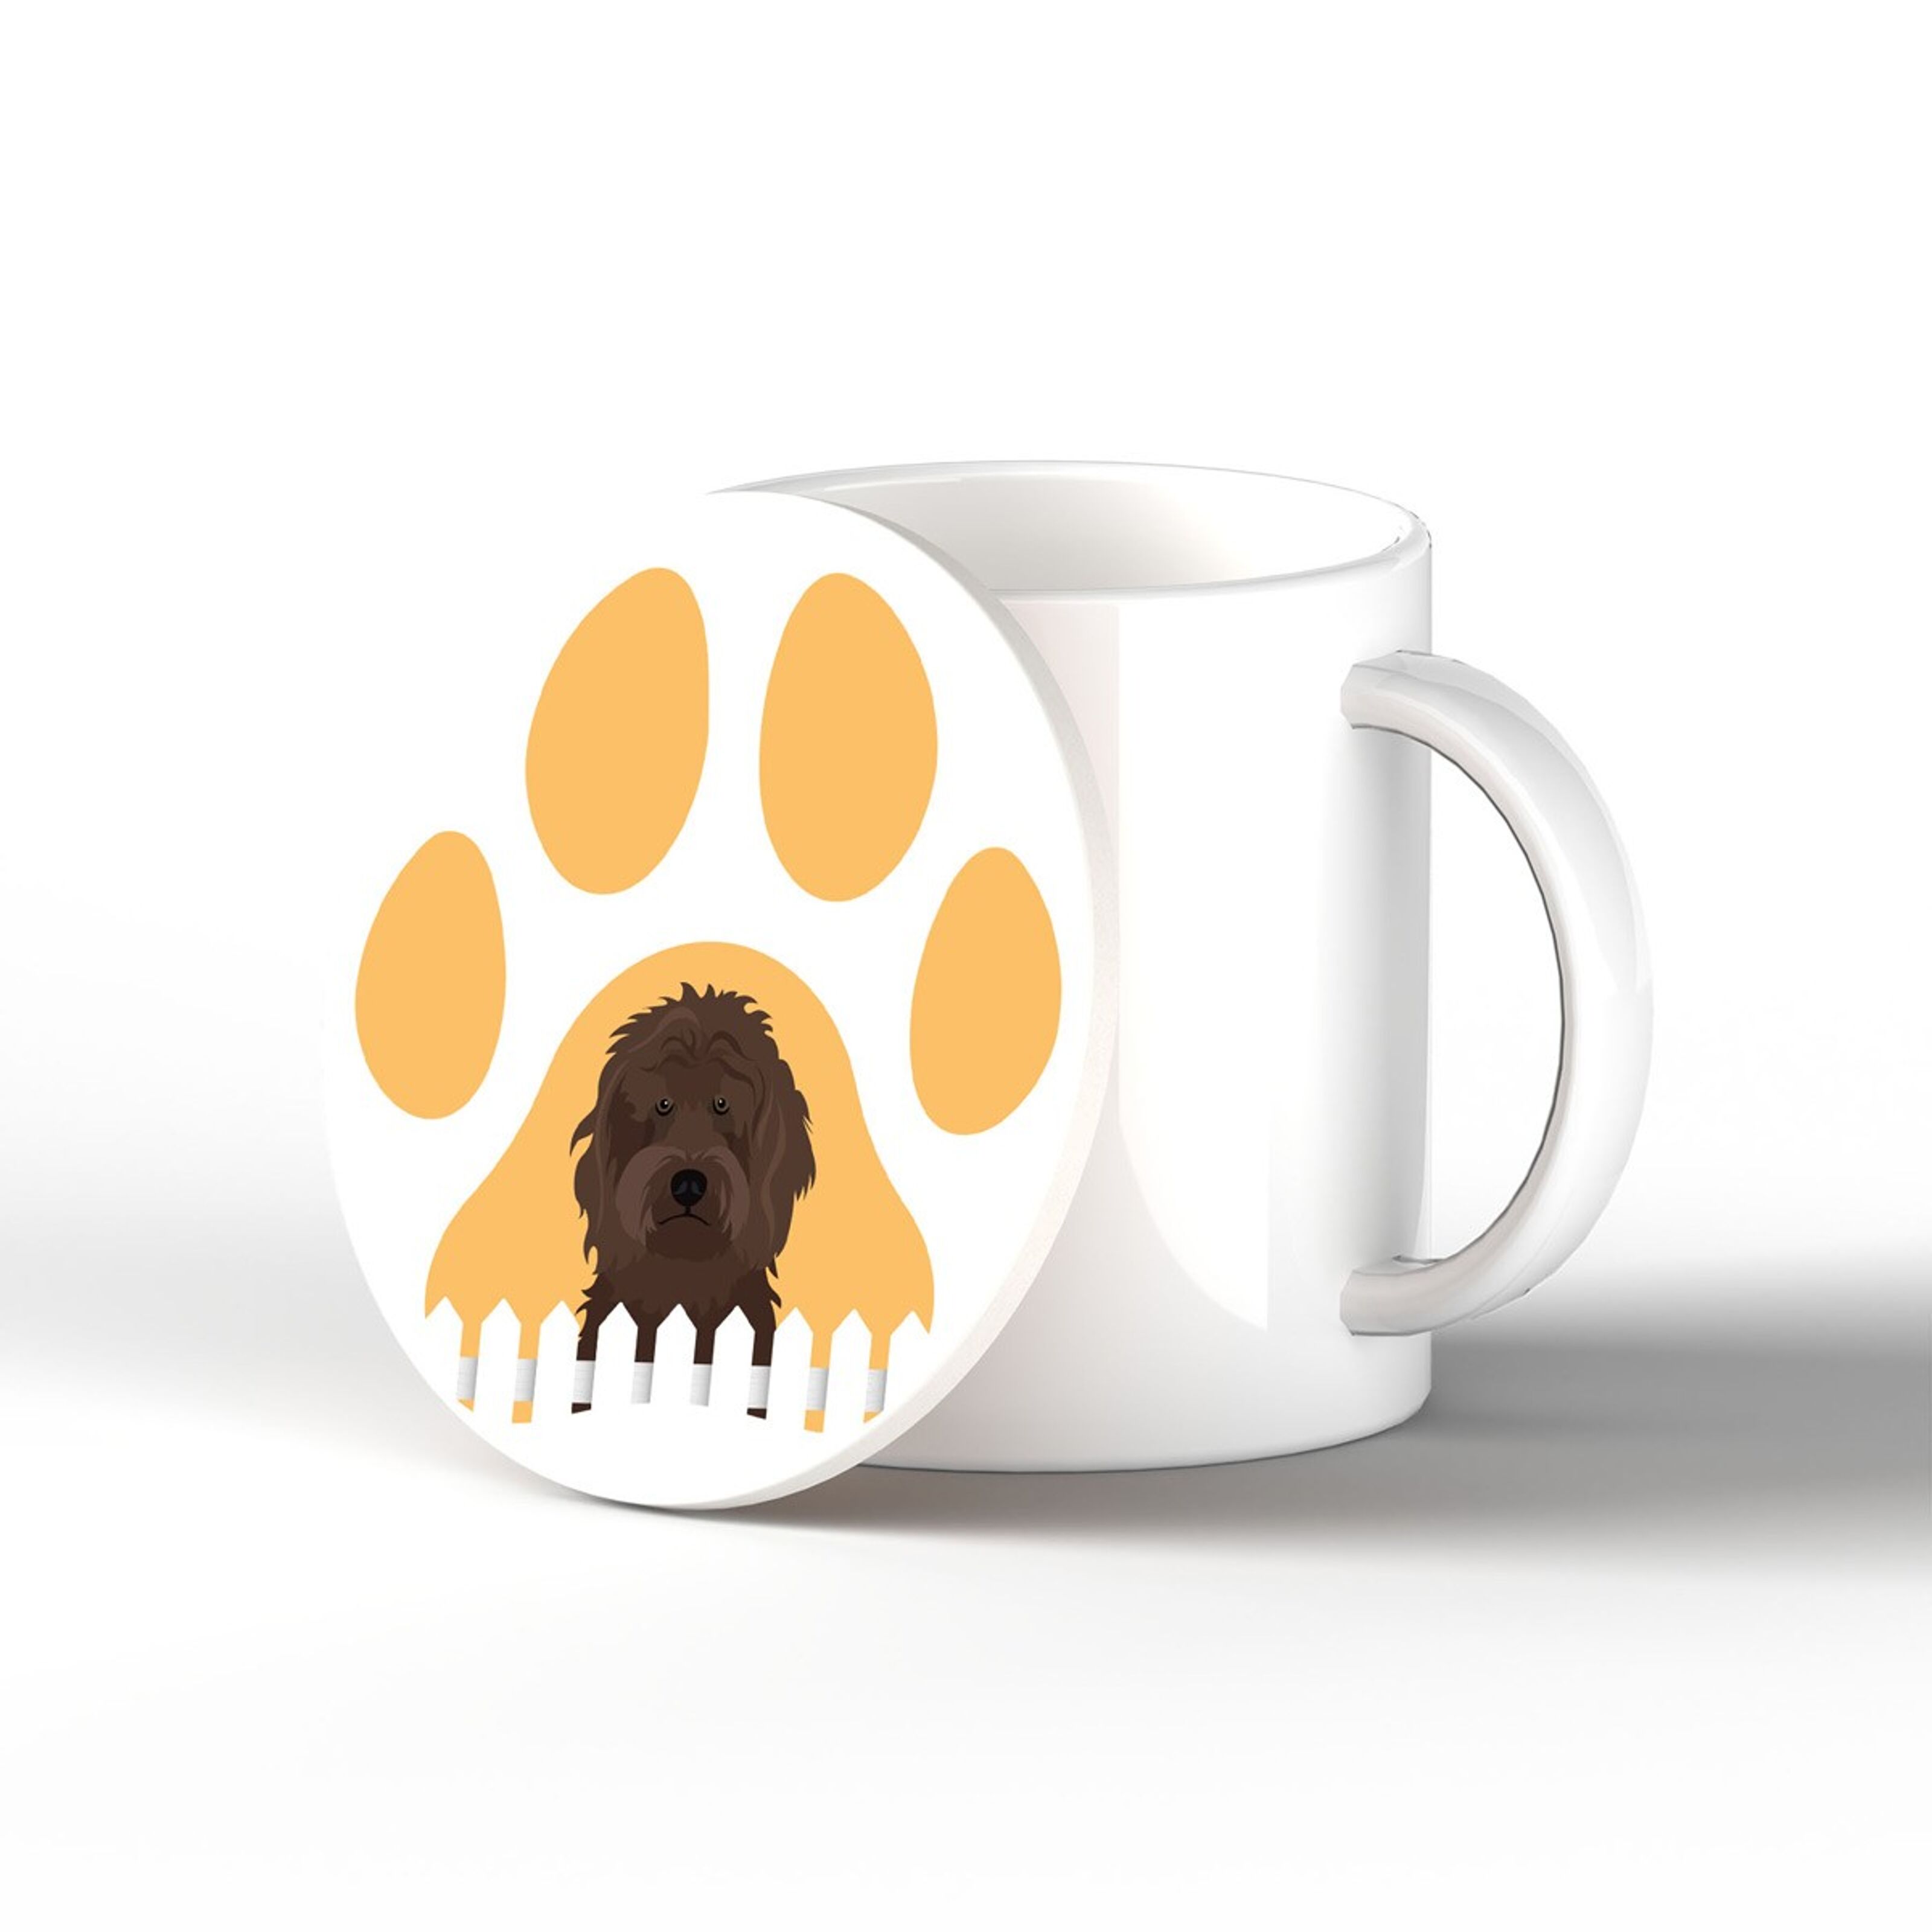 Pudding Dog Coffee Pot and Cup Set - Ceramic - Cartoon-inspired Design -  ApolloBox